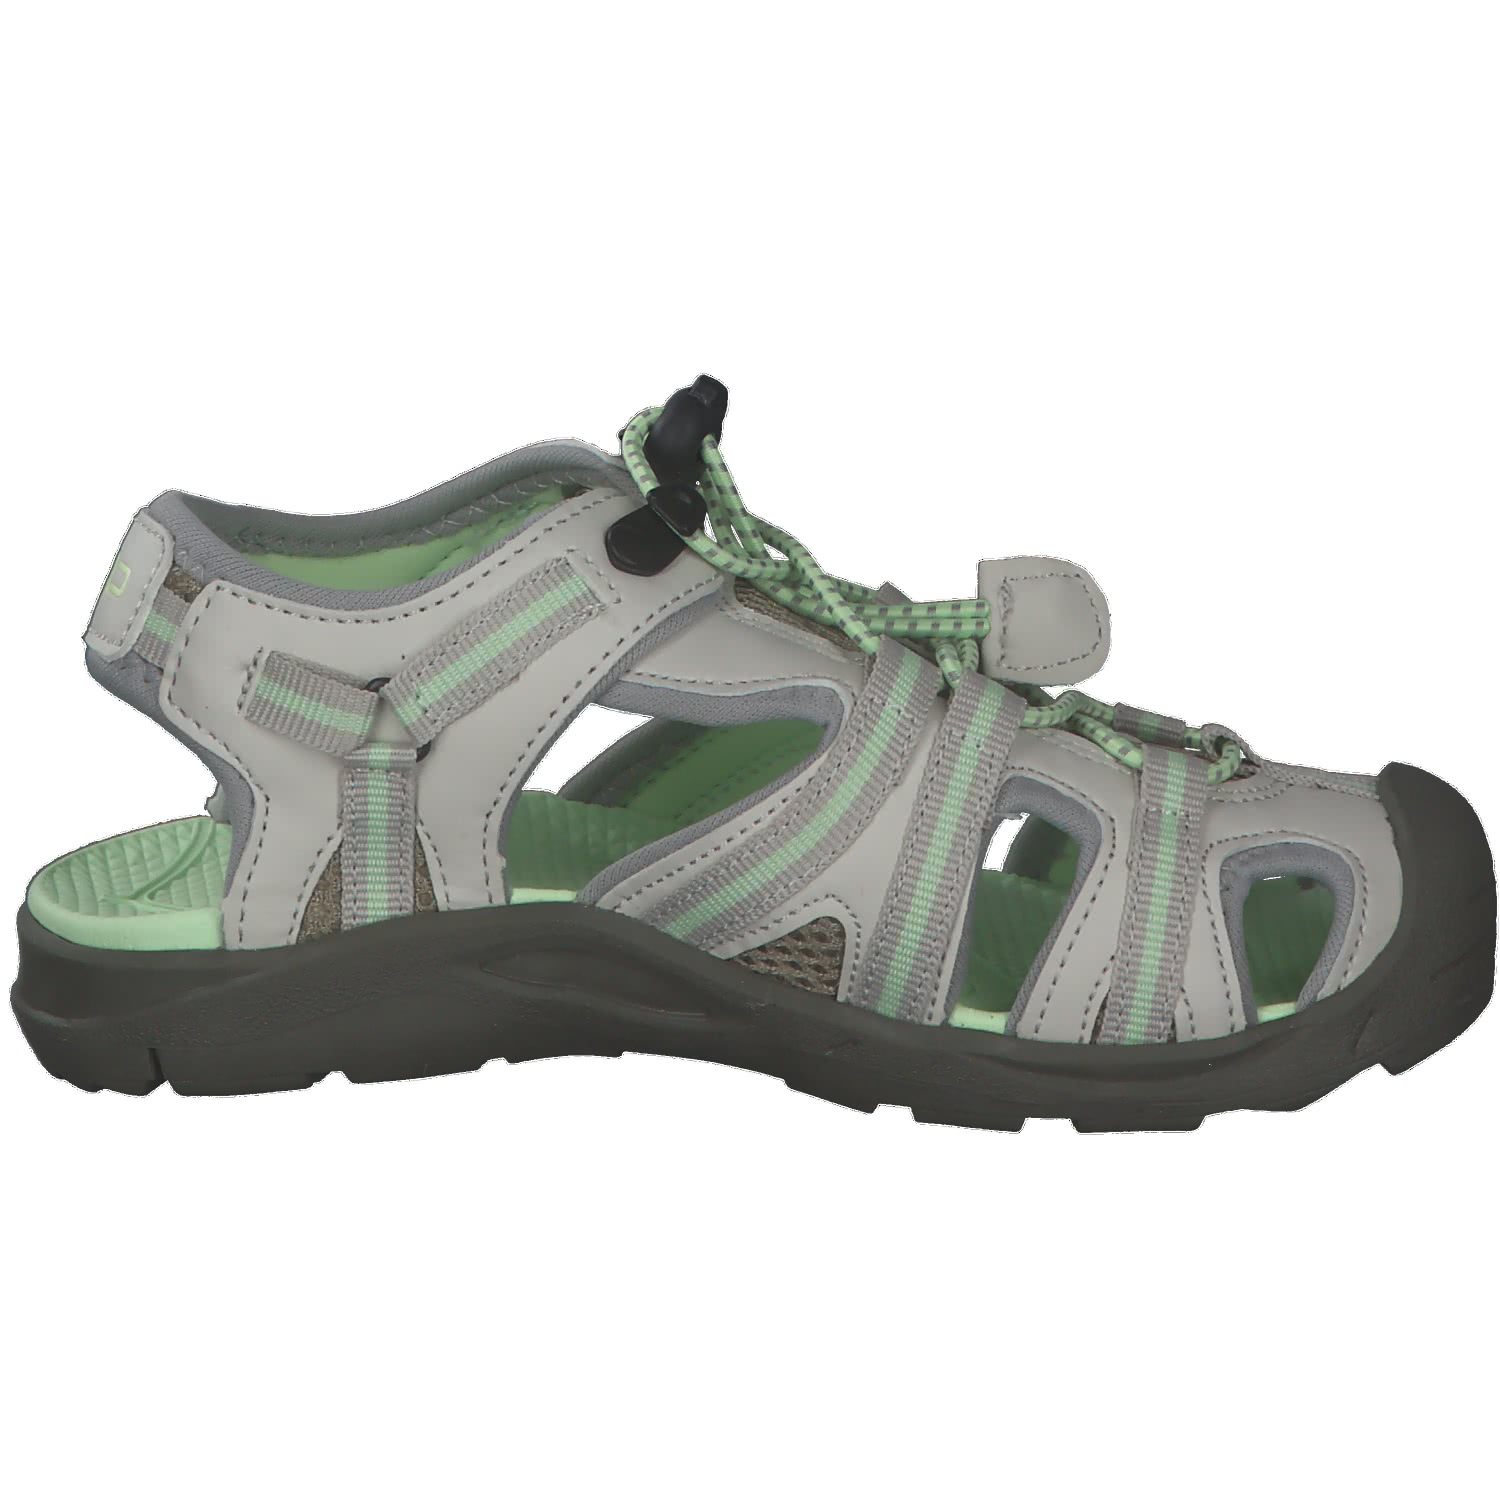 Sandale Kinder Hiking Aquarii Sandal 30Q9664 CMP 2.0 | eBay